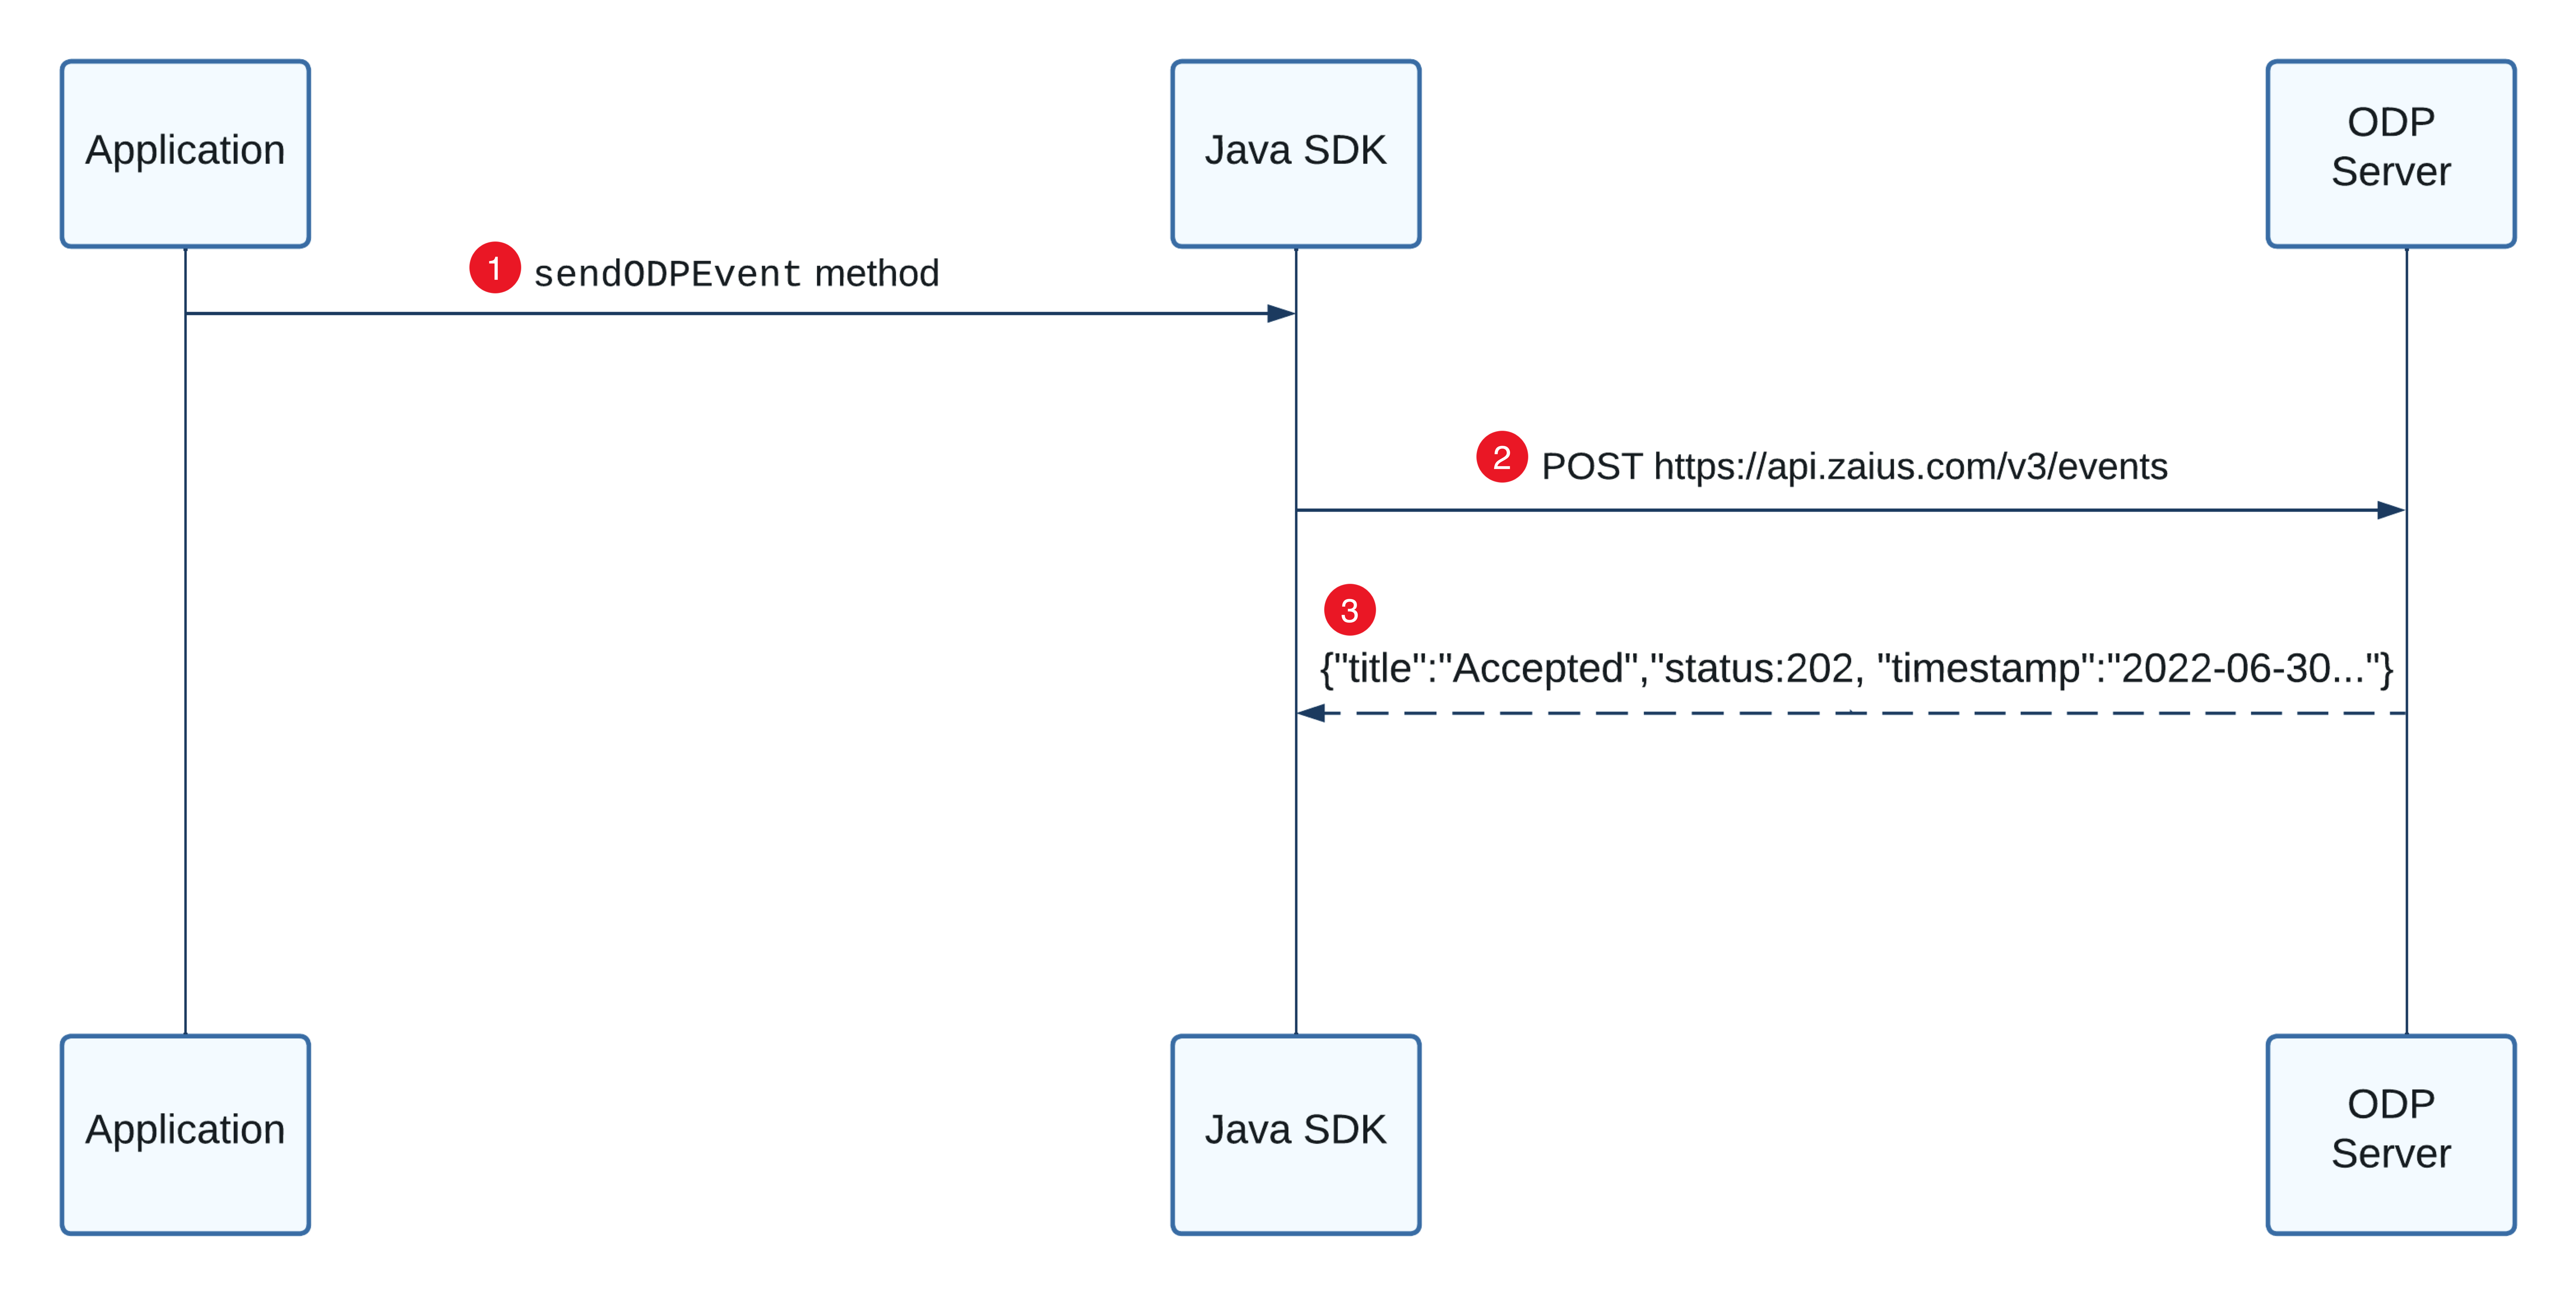 Java SDK network diagram for calling ODP